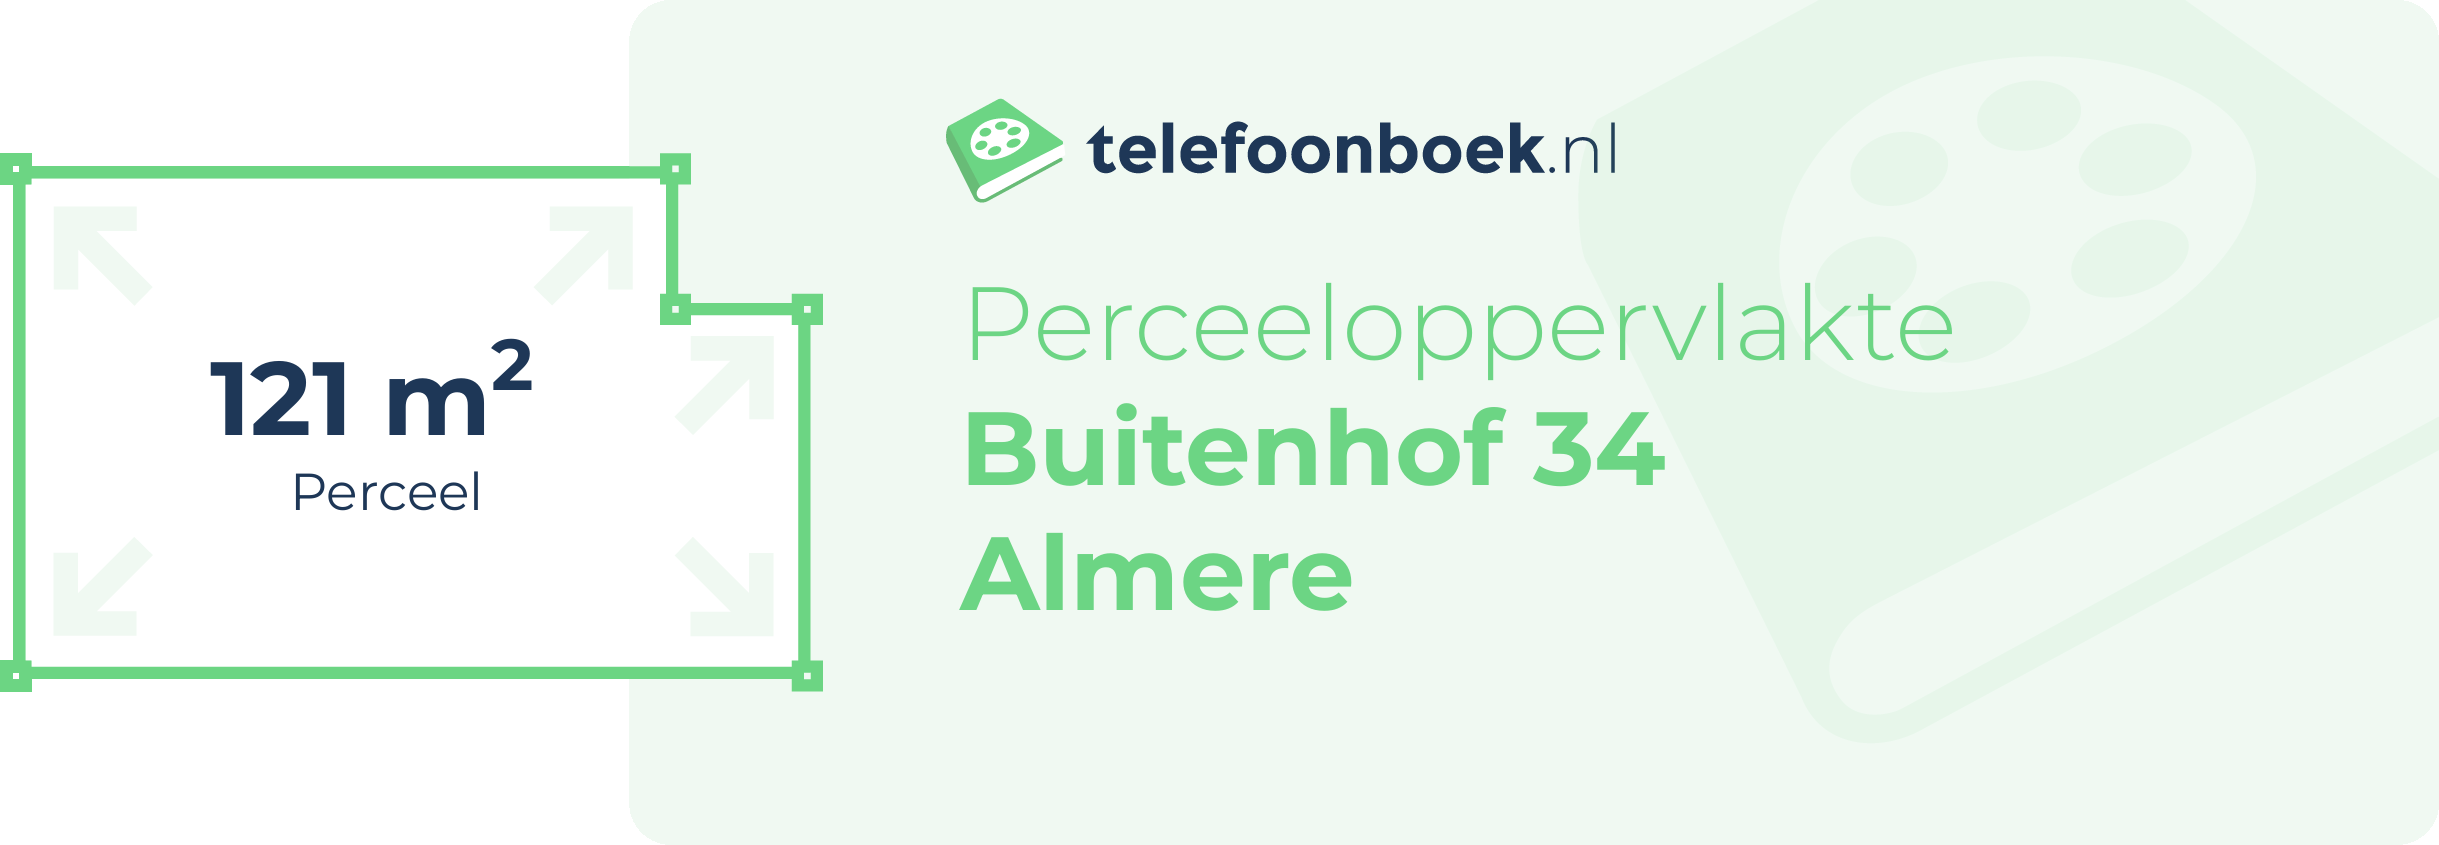 Perceeloppervlakte Buitenhof 34 Almere